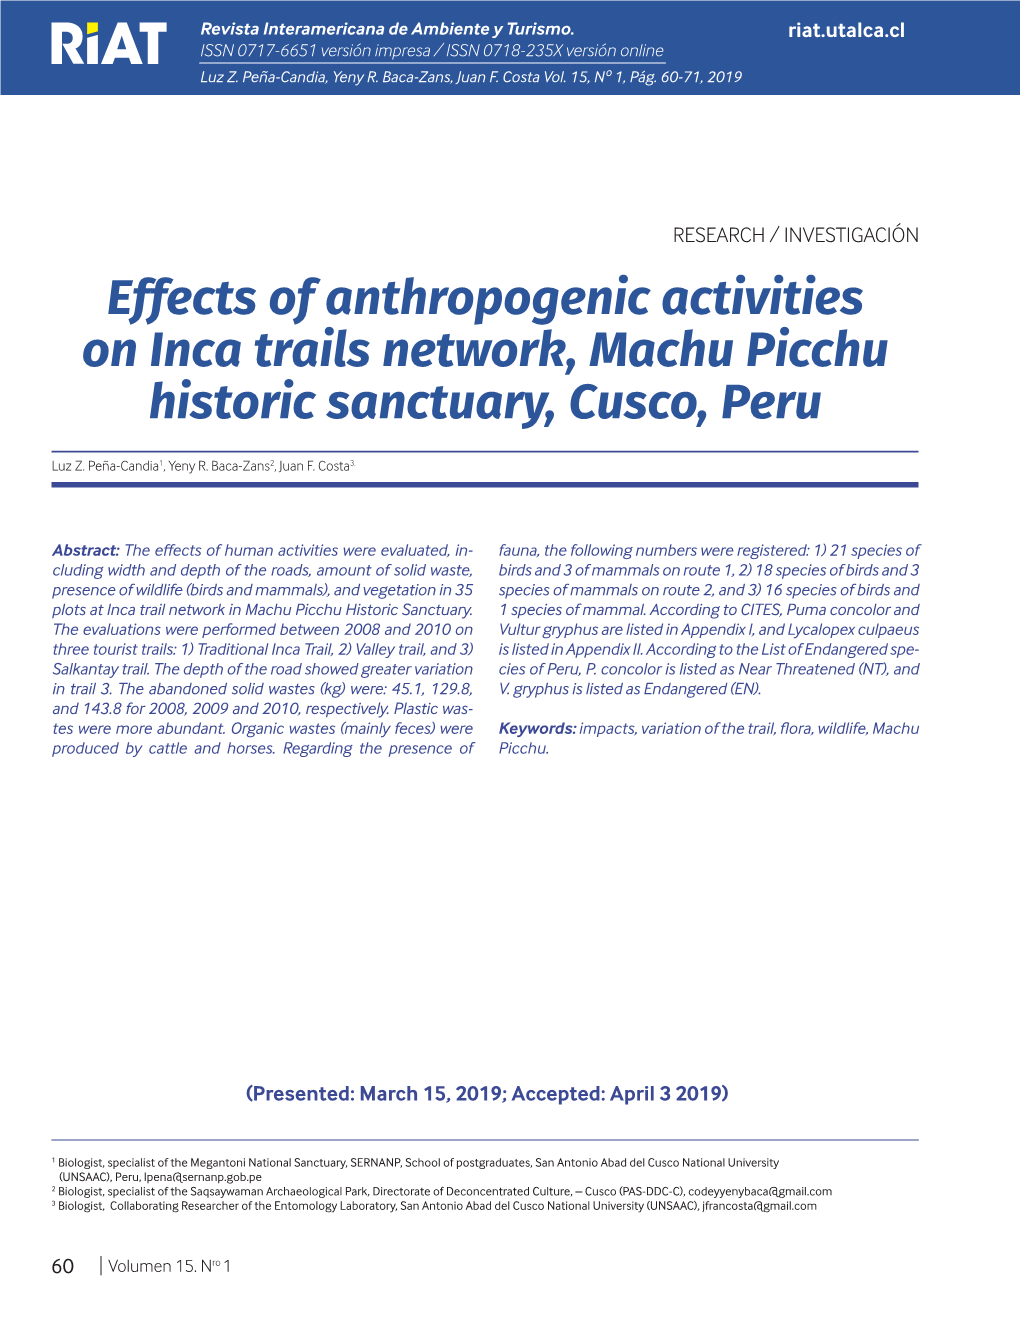 Effects of Anthropogenic Activities on Inca Trails Network, Machu Picchu Historic Sanctuary, Cusco, Peru